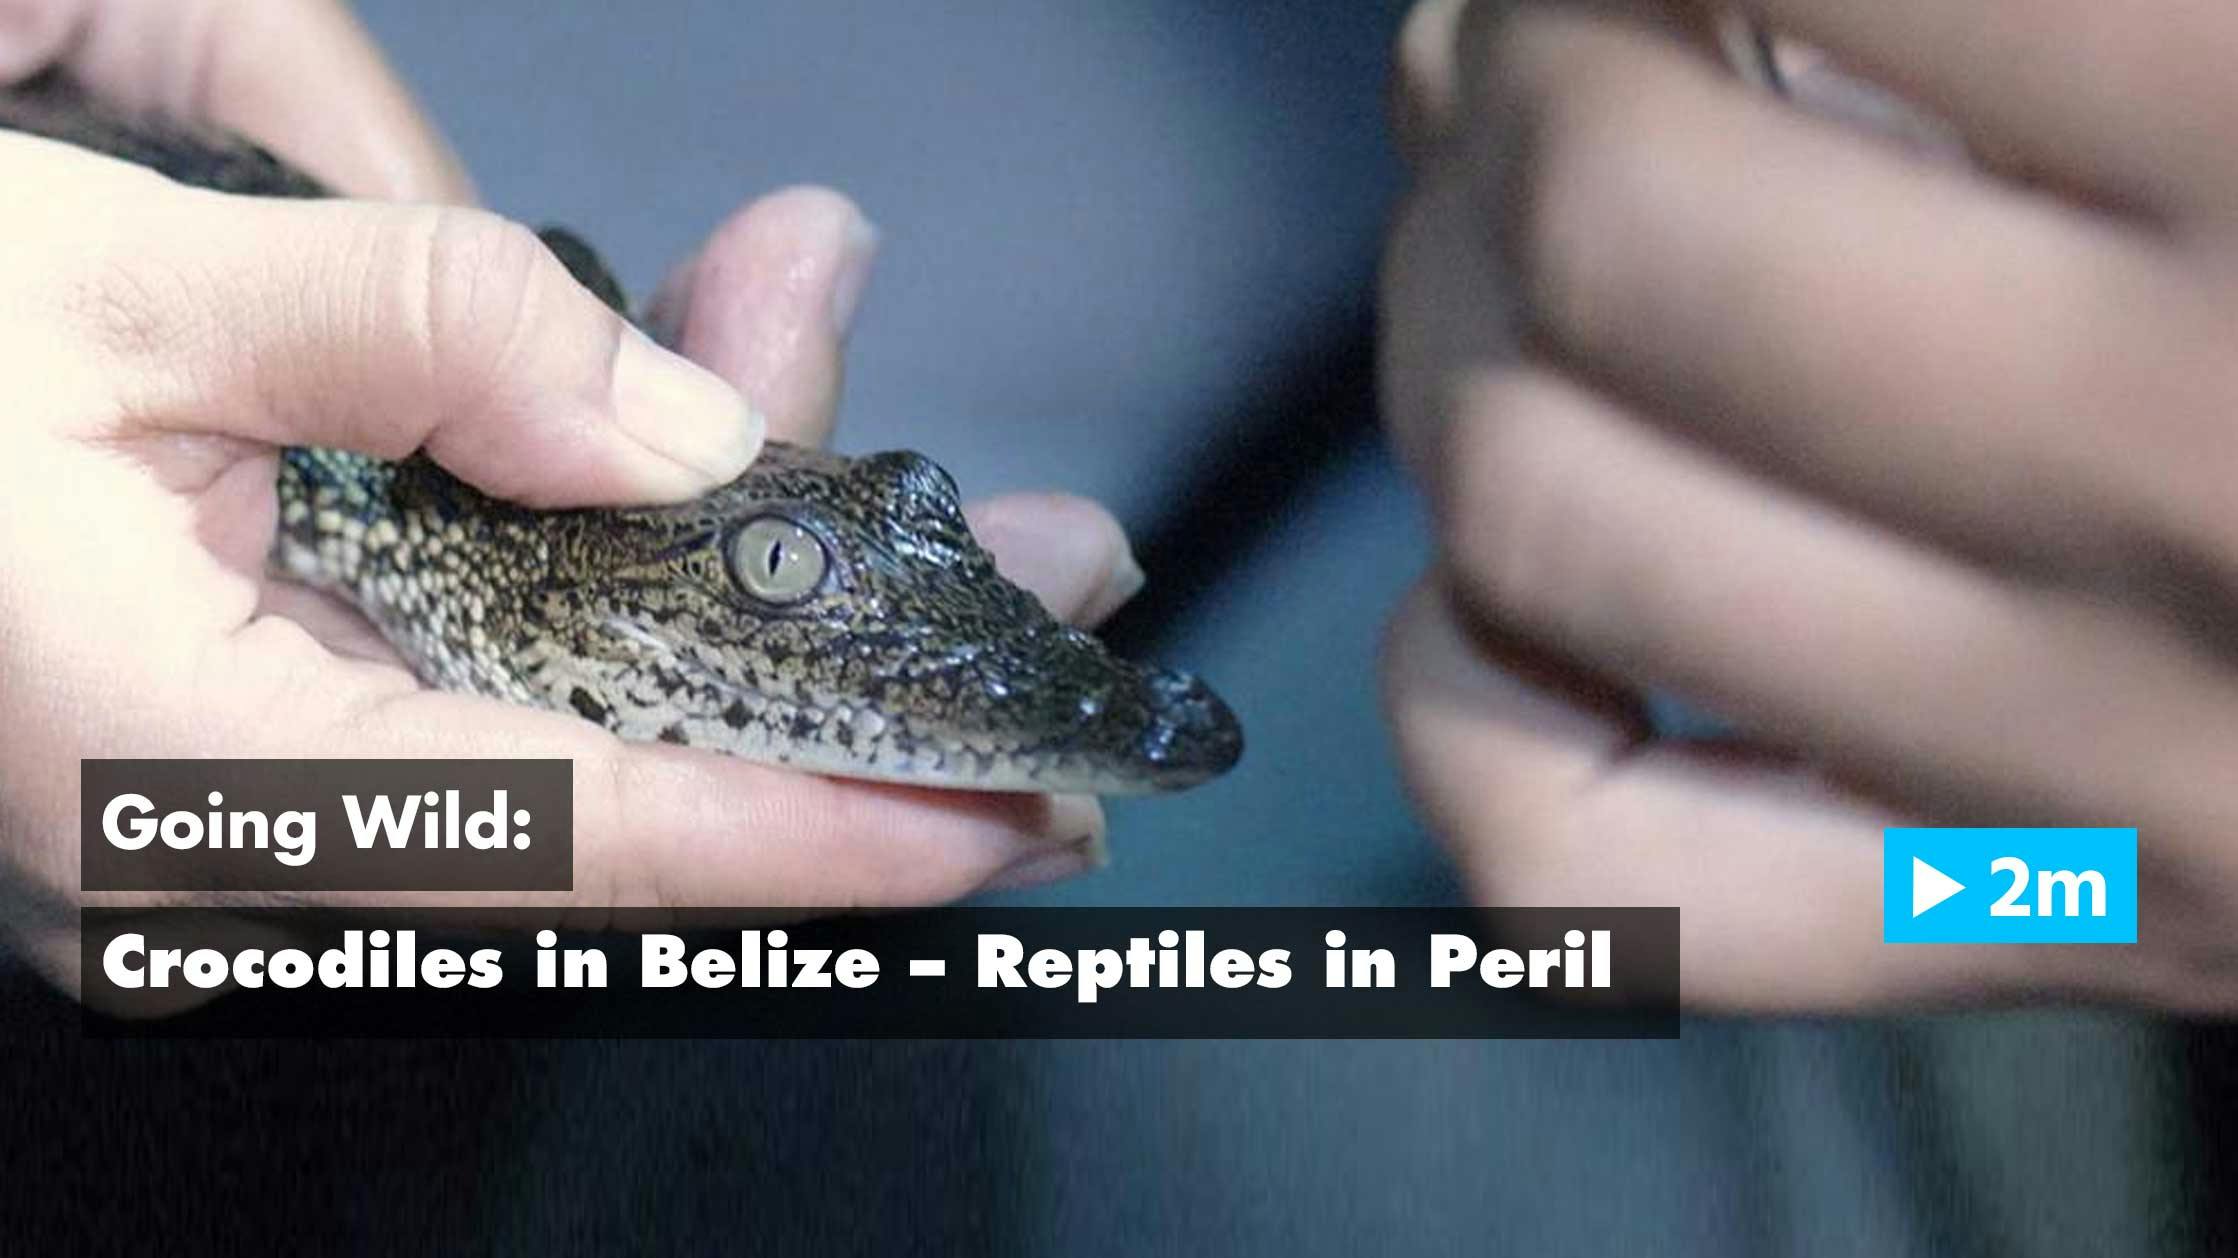 Going Wild: Crocodiles in Belize – Reptiles in Peril